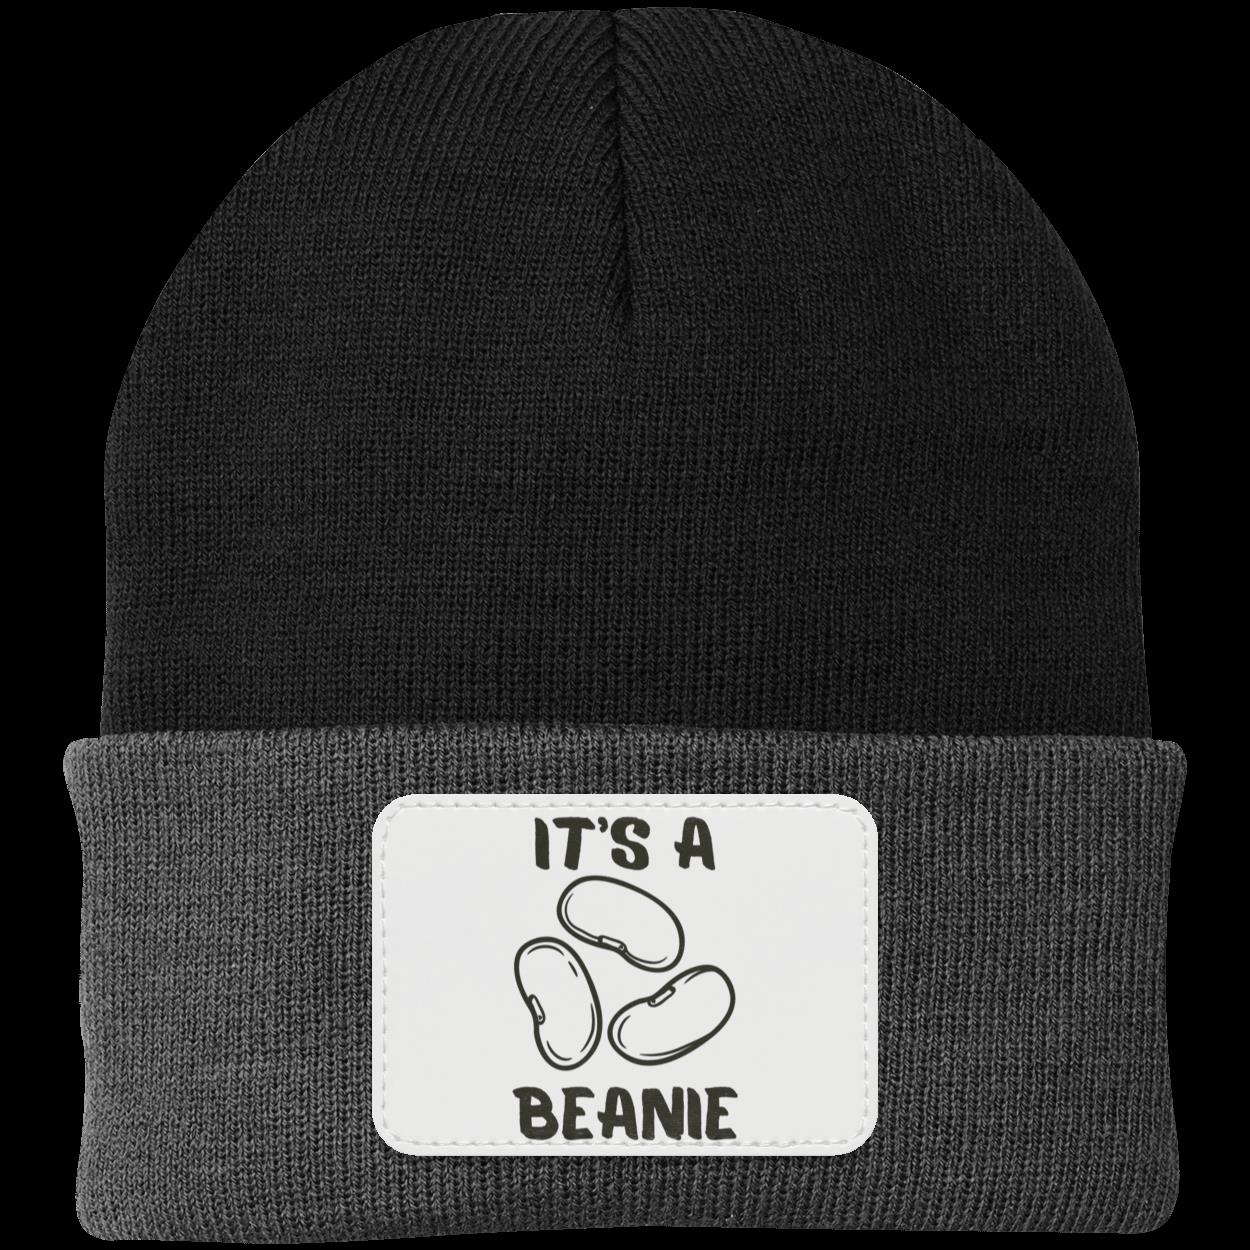 It's A Beanie | Hat | Skull Cap